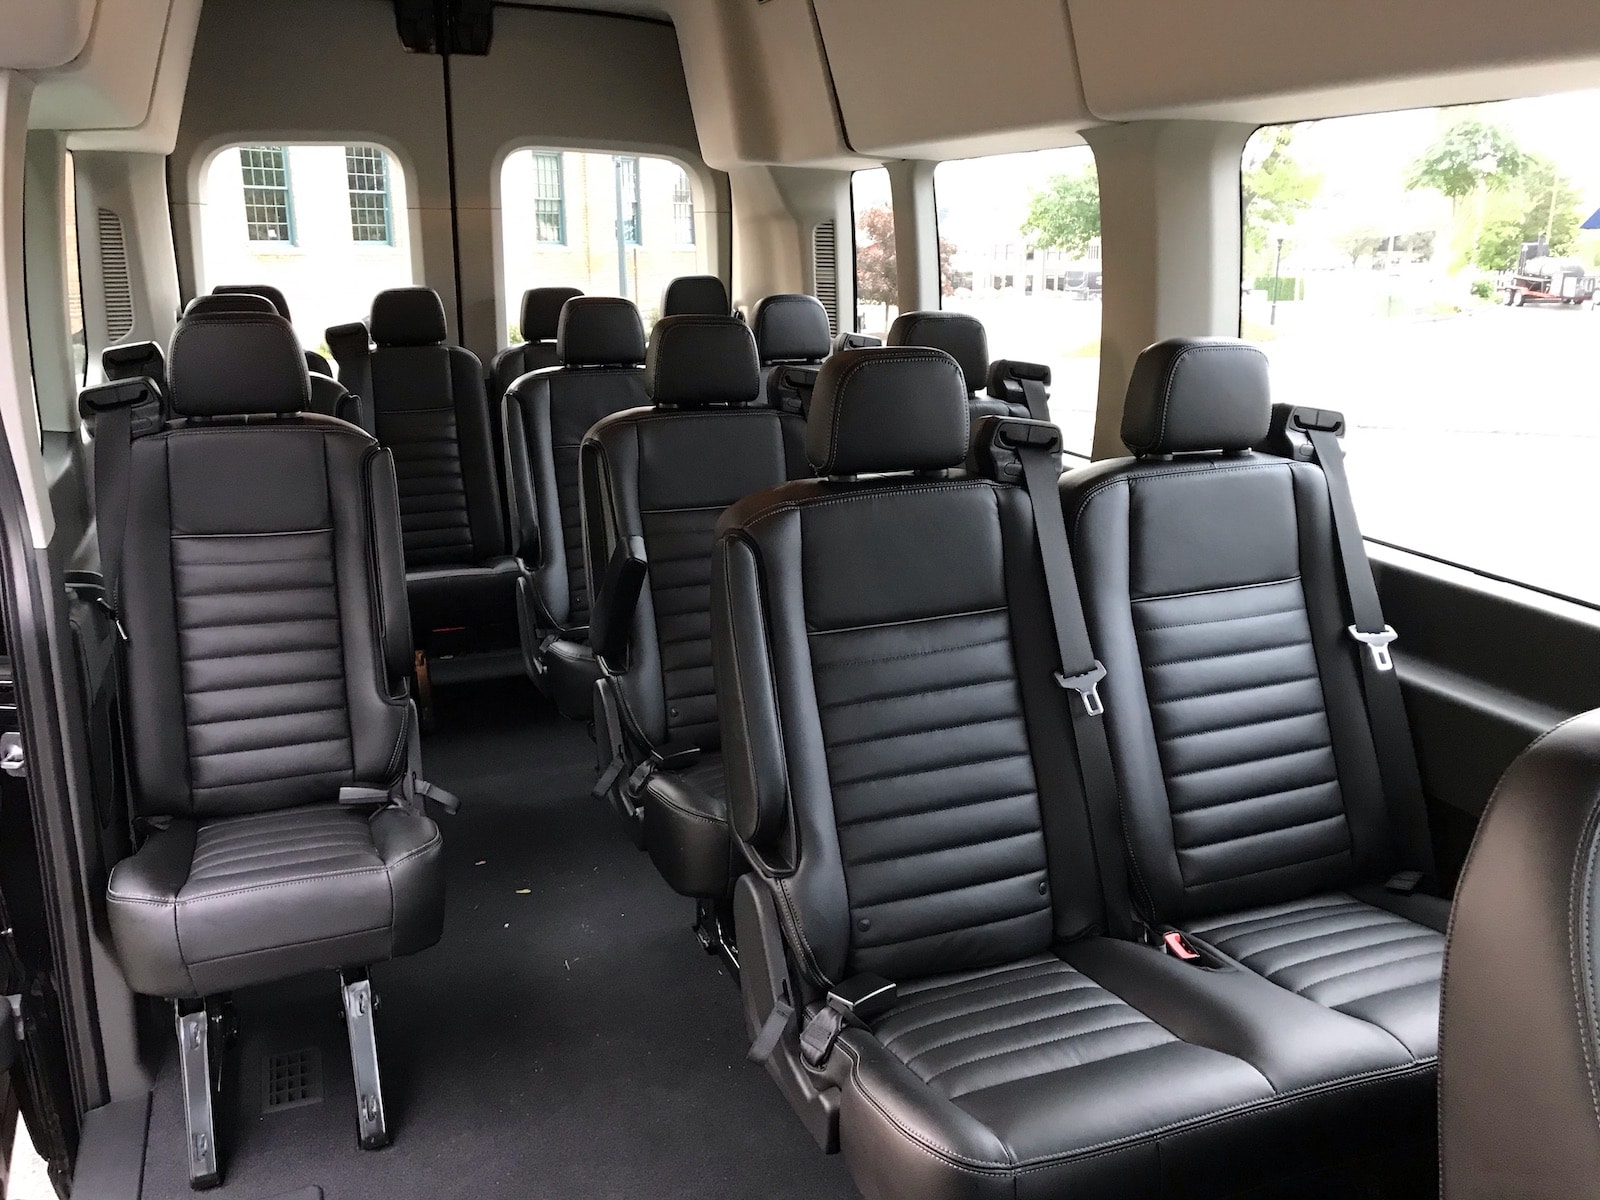 A Week With: 2020 Ford Transit 350 XLT AWD - The Detroit Bureau